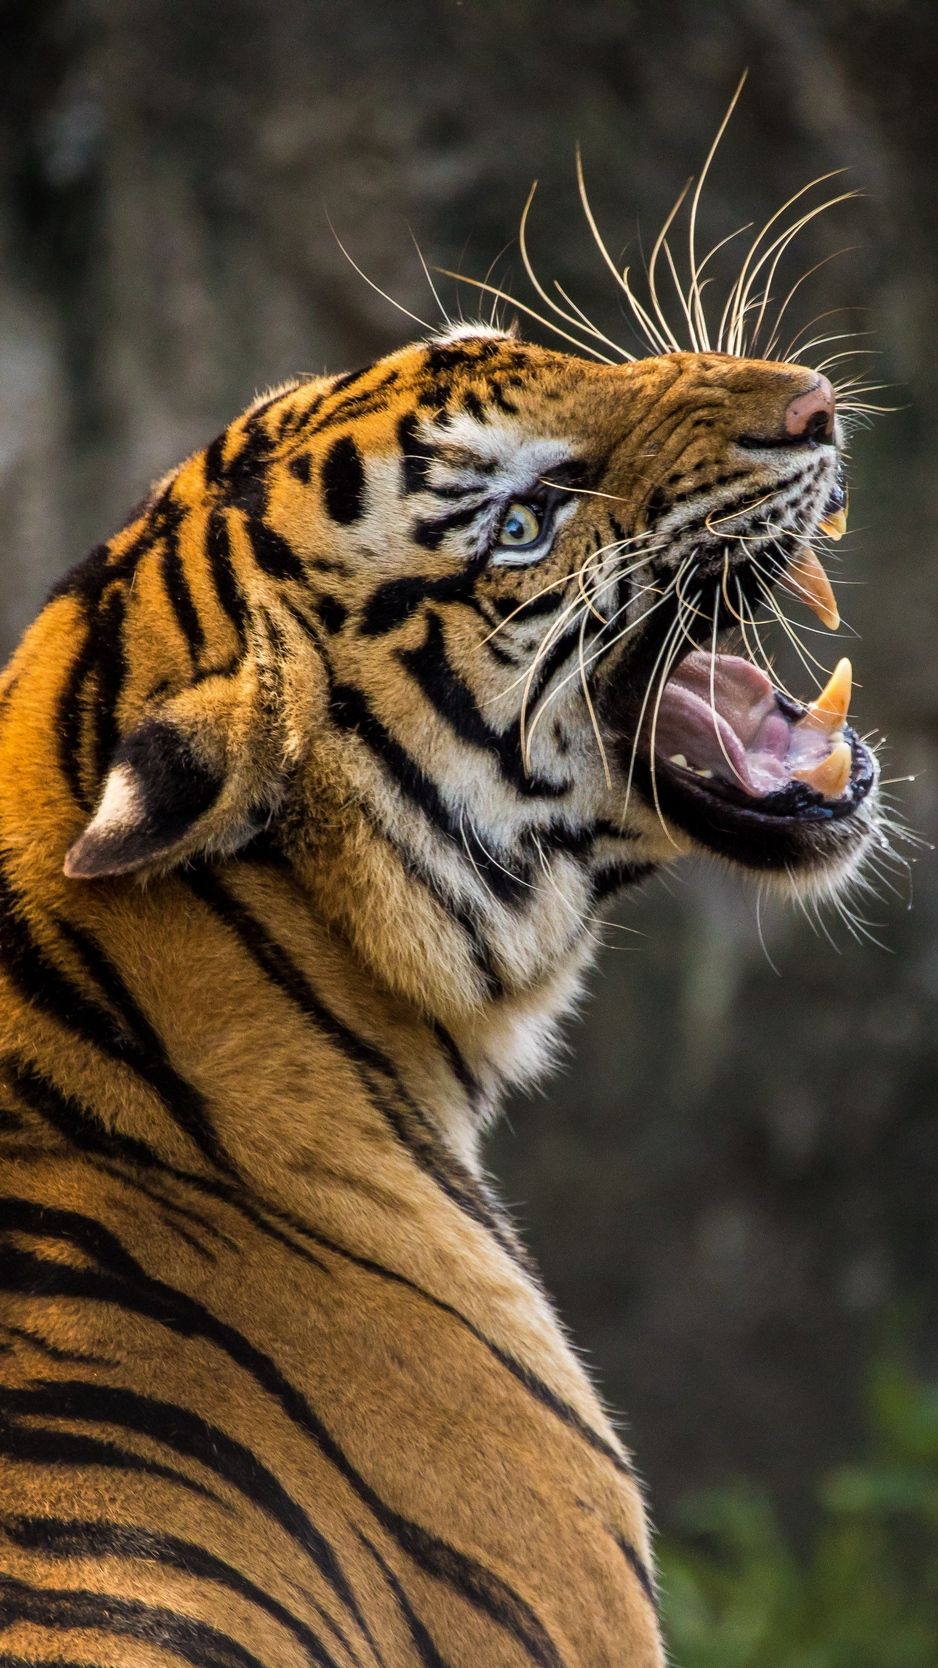 Tiger, predator, grin, fangs wallpaper, background iphone